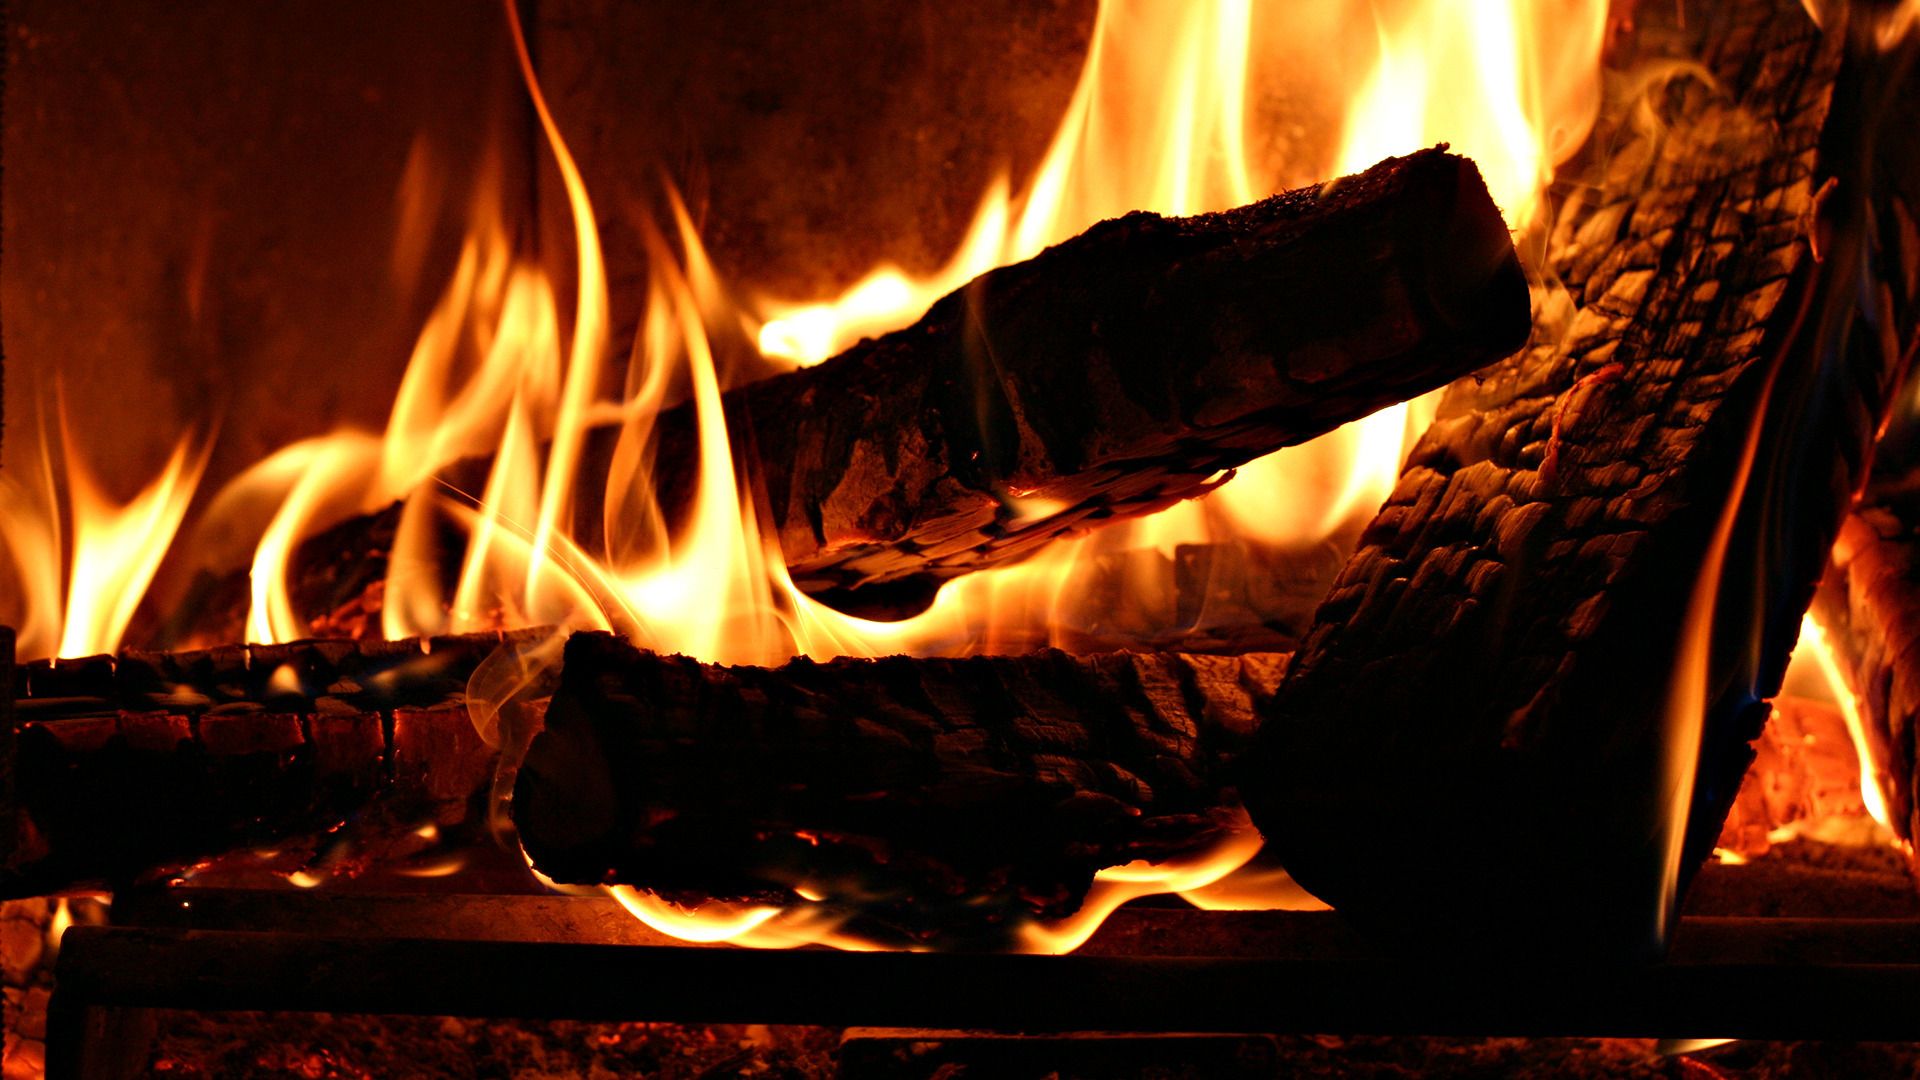 Fireplace Desktop Background